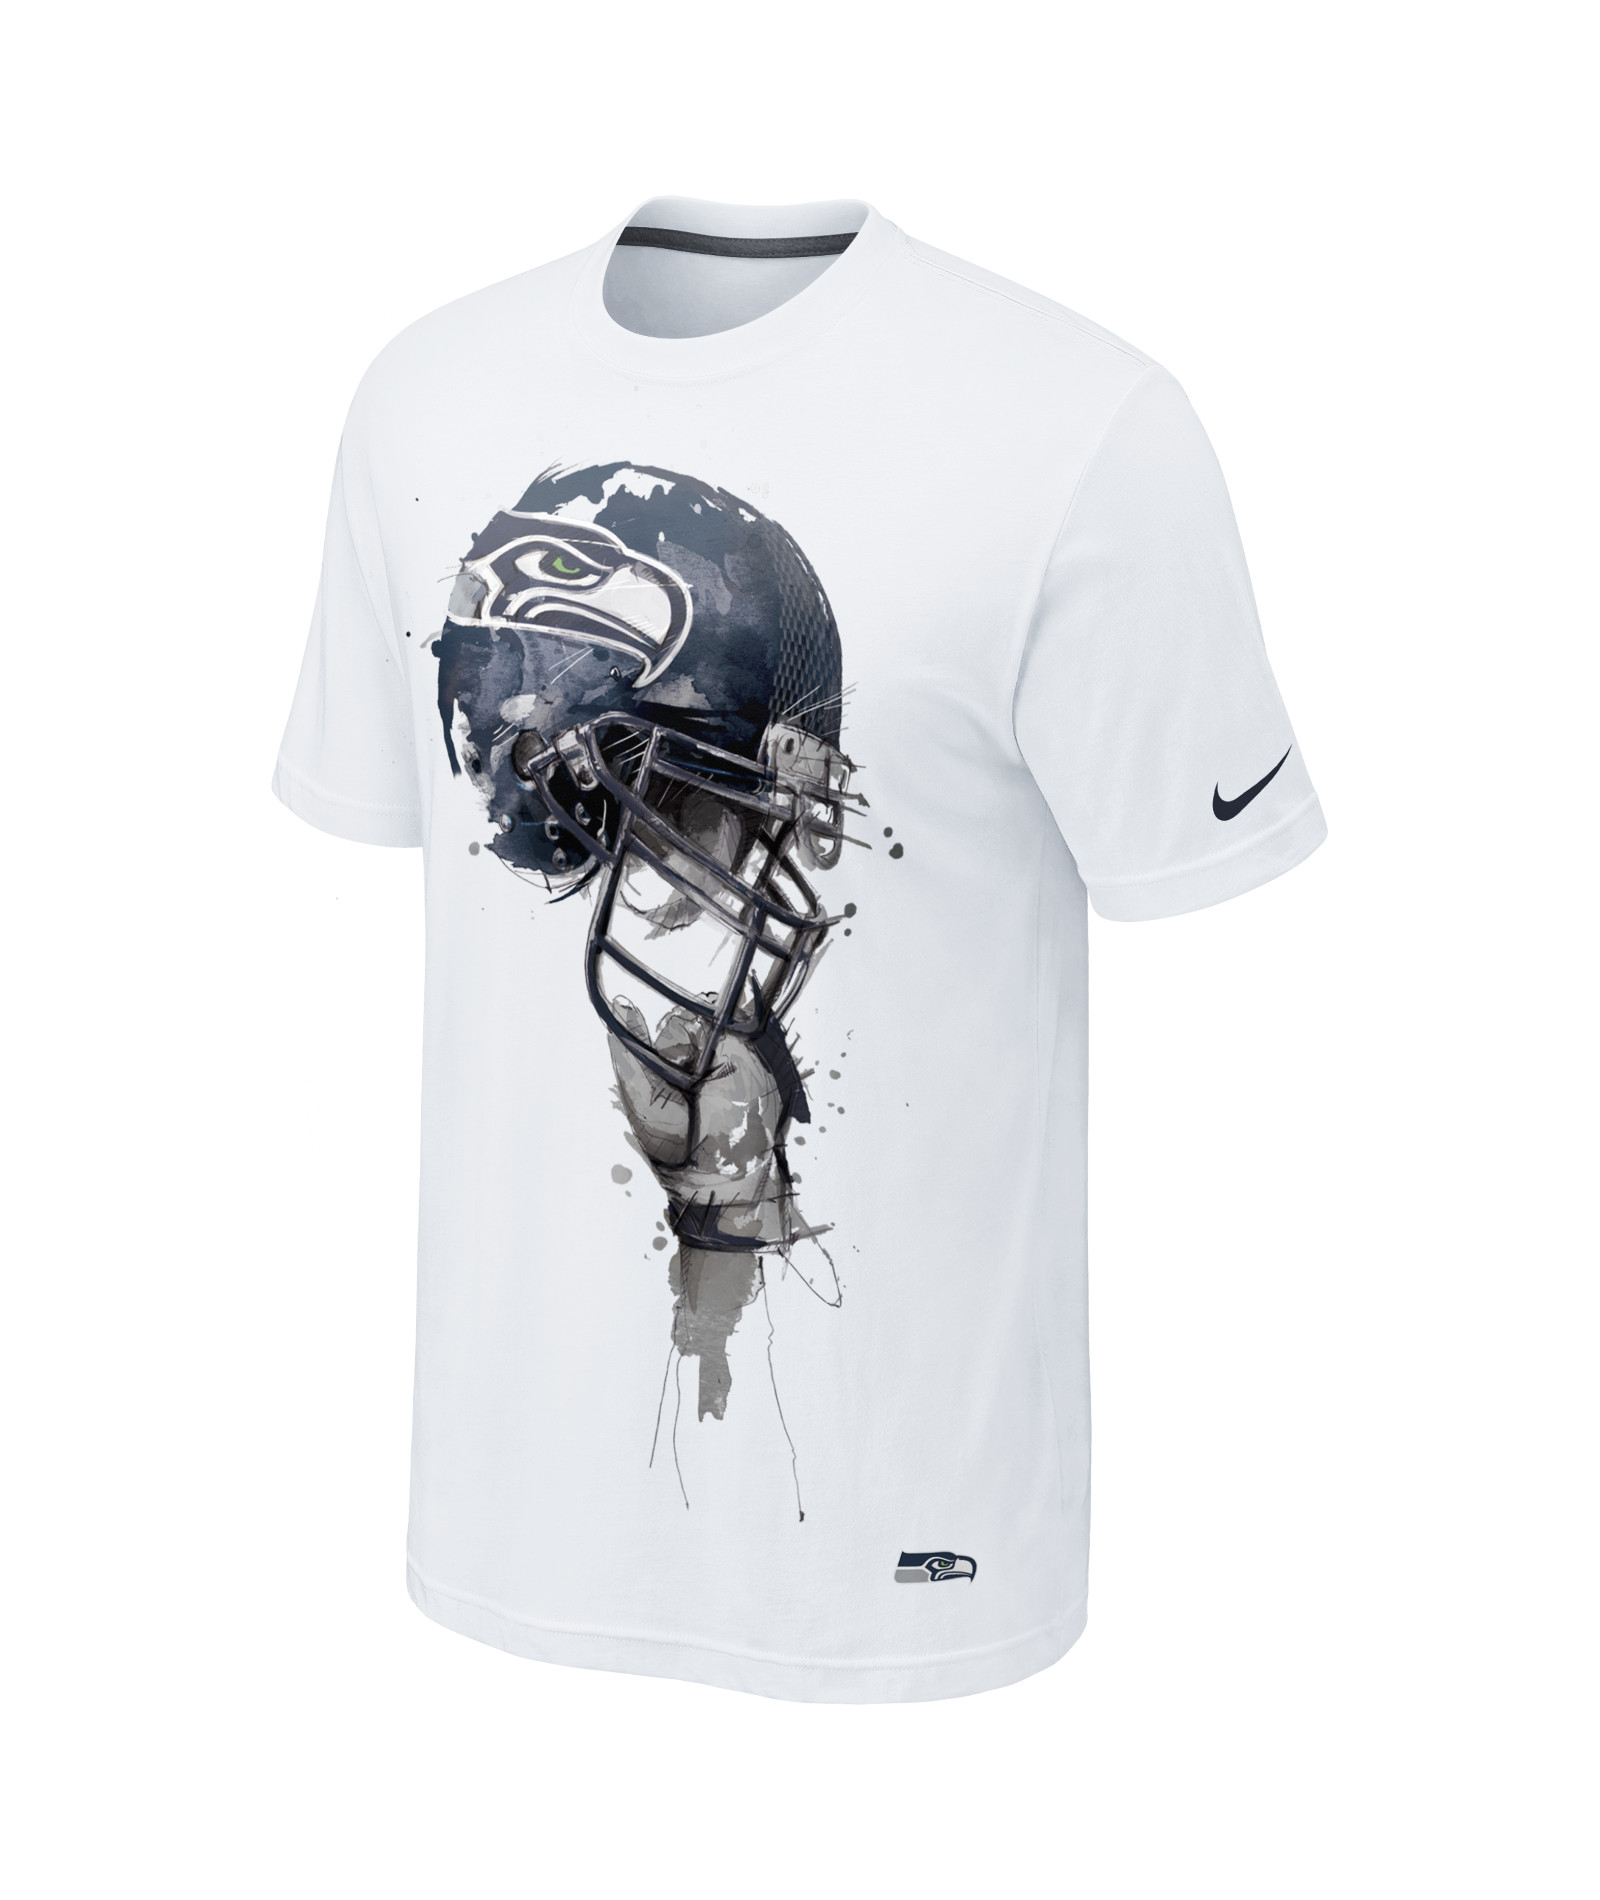 Nike-Helmet-Tri-Blend-%28NFL-49ers%29-Mens-T-Shirt-468360_100_A.jpg?wid=1600&hei=1900&fmt=jpeg&